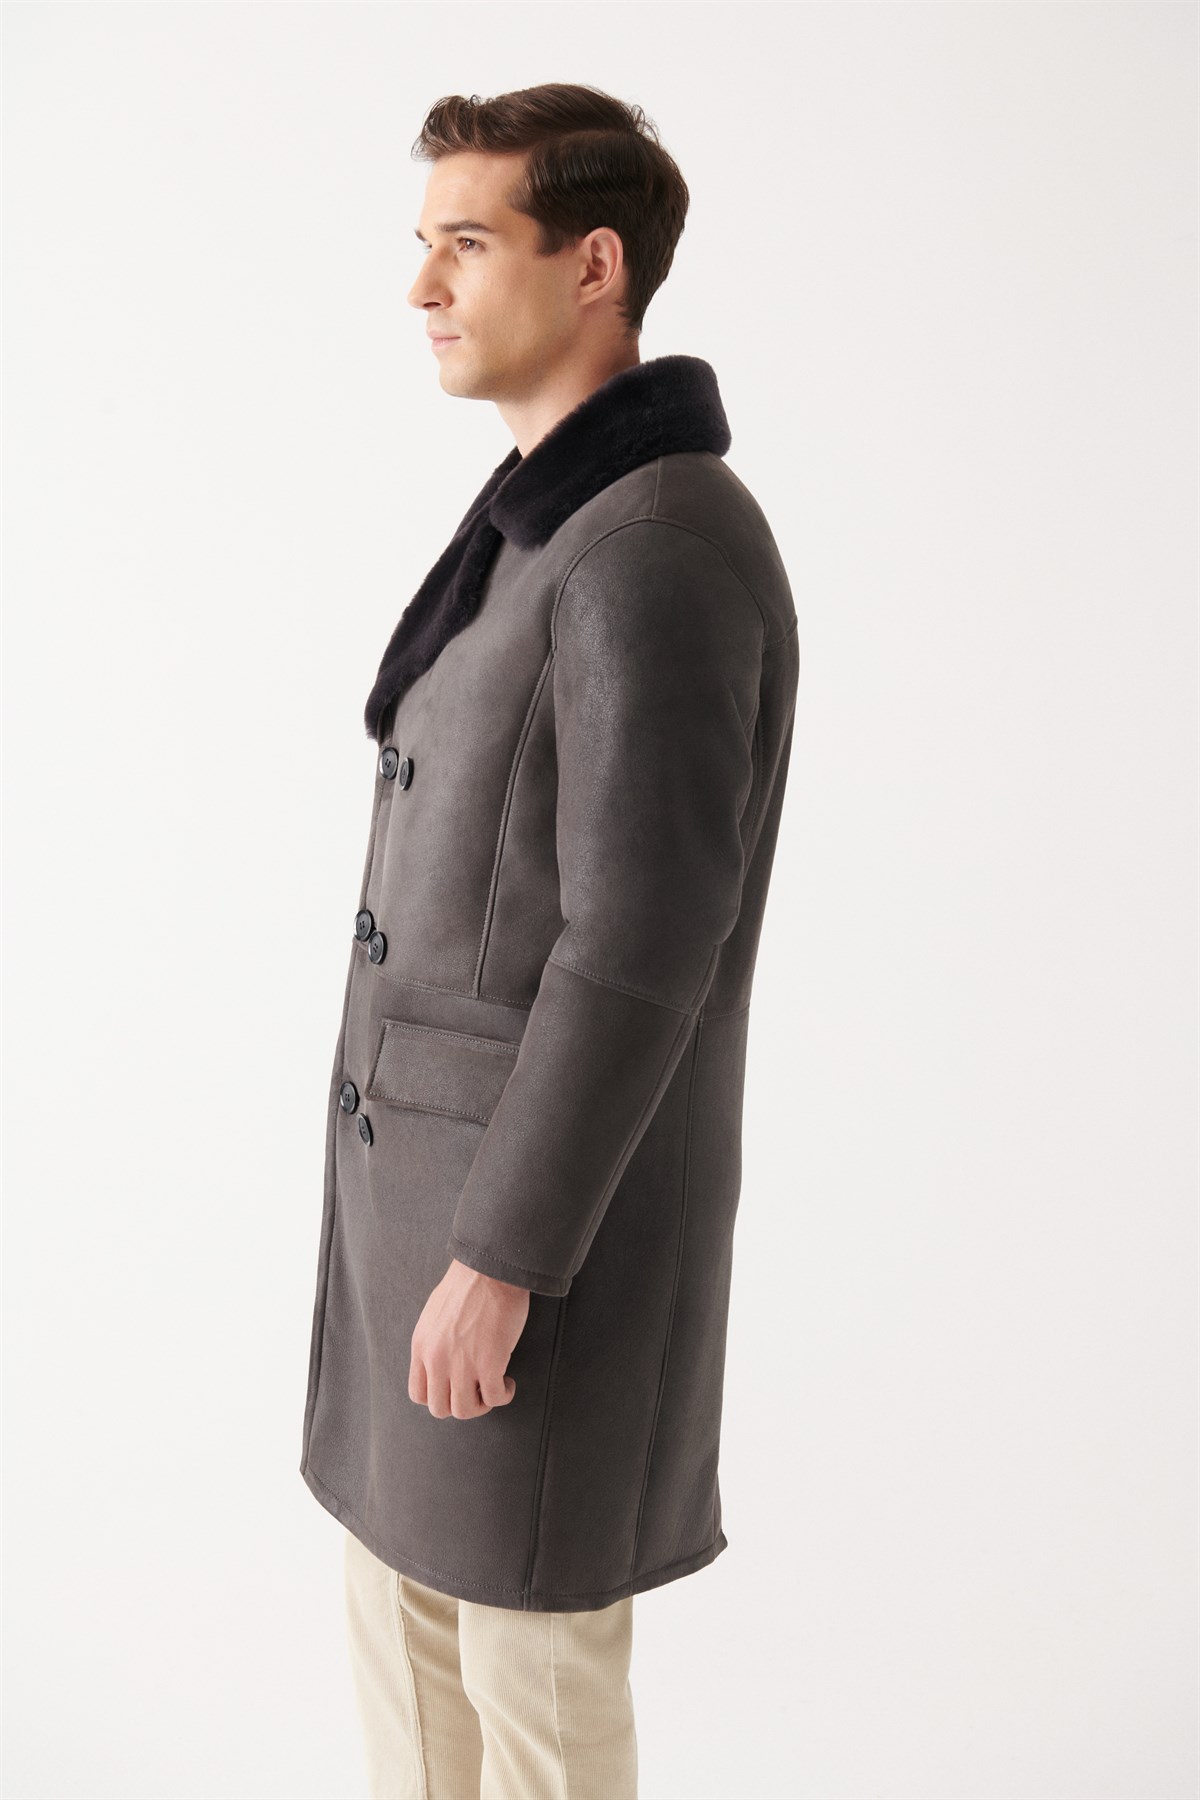 Harrison Brown Fur Long Coat - Men's Long Coat - Abbraci